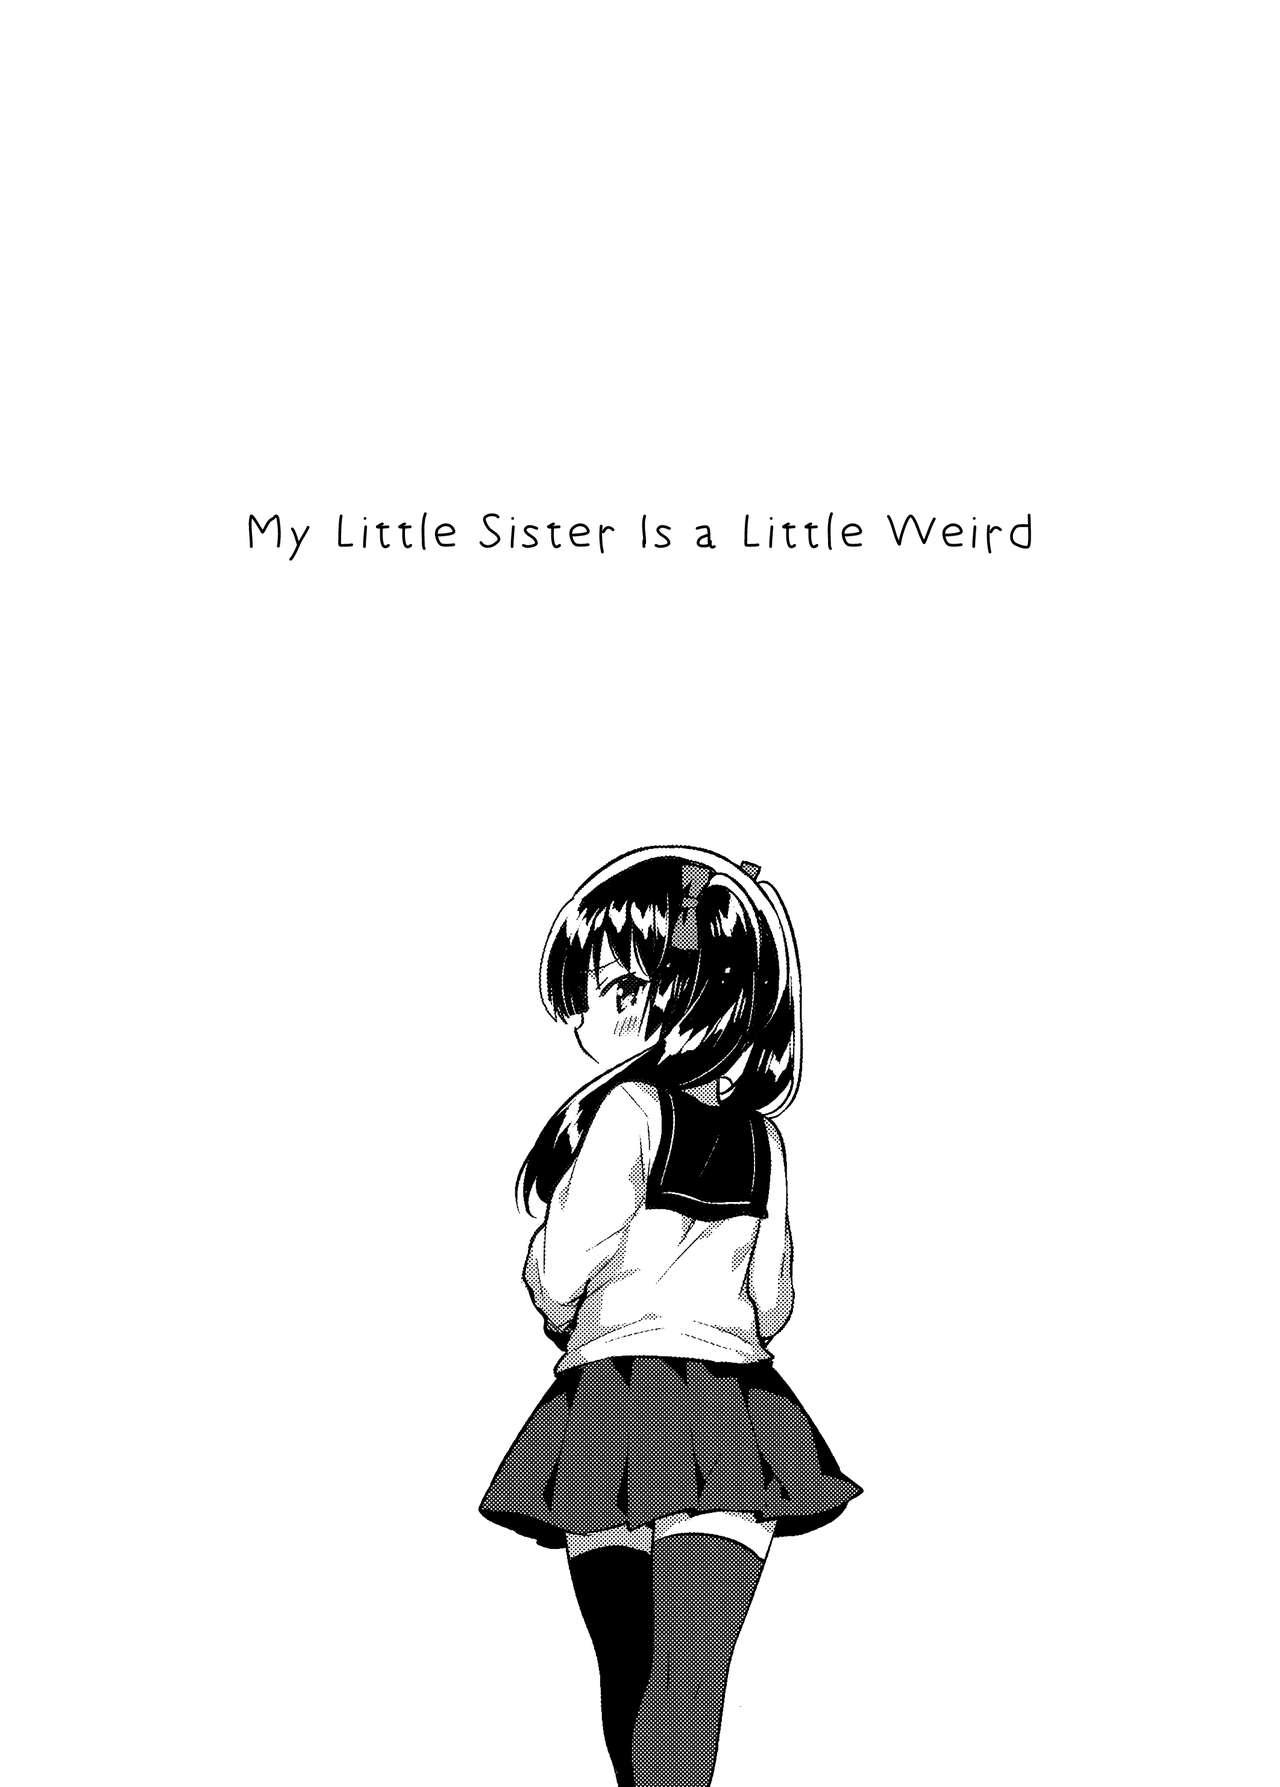 Imouto wa Chotto Atama ga Okashii + Omake | My Little Sister Is a Little Weird + Bonus Story 4